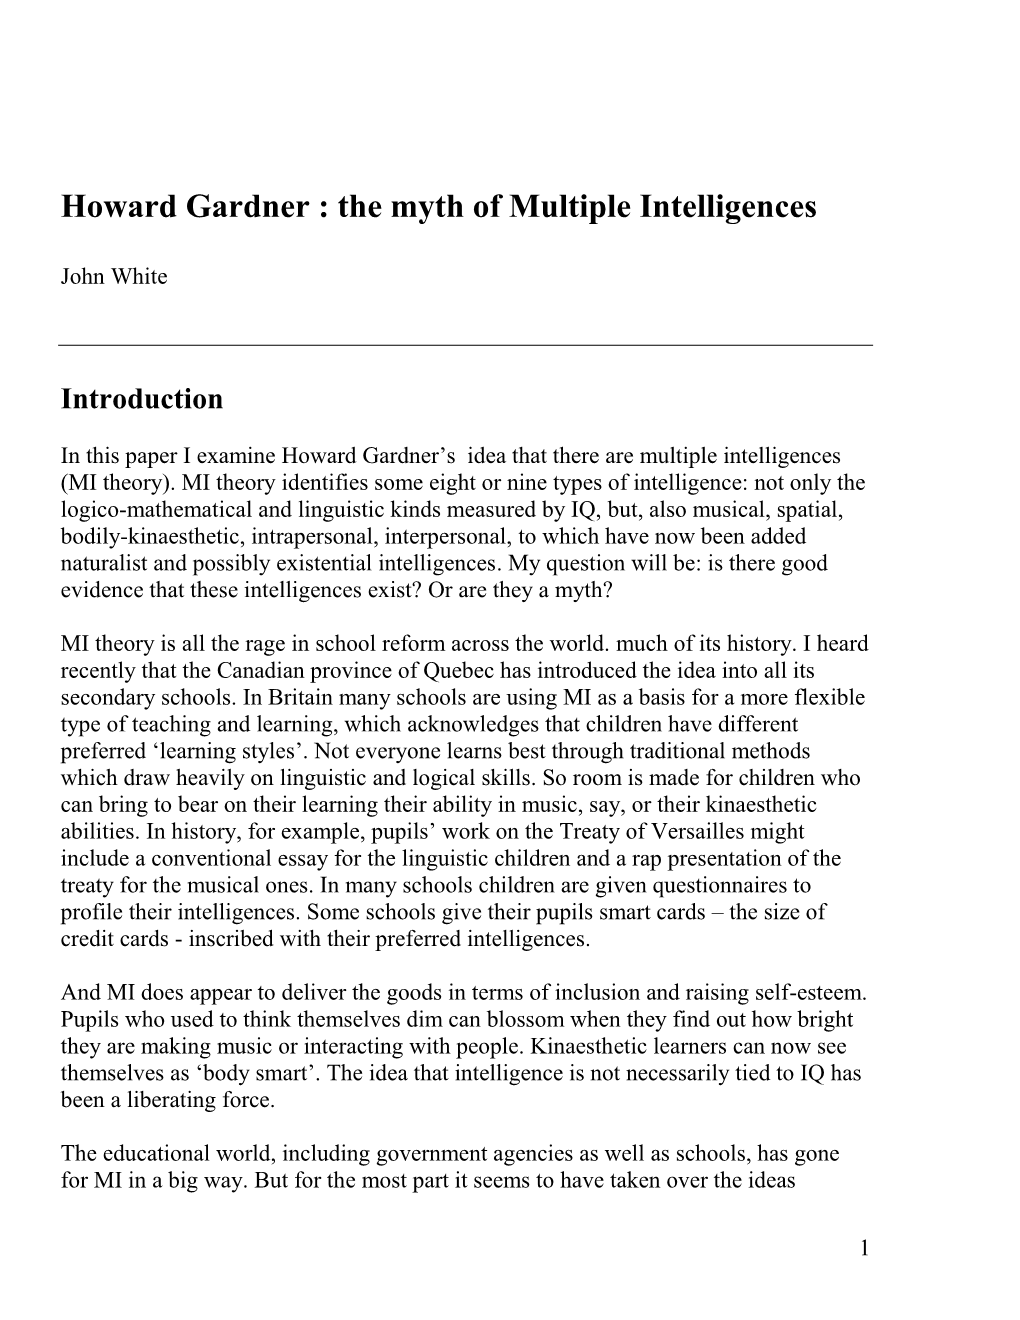 Howard Gardner : the Myth of Multiple Intelligences